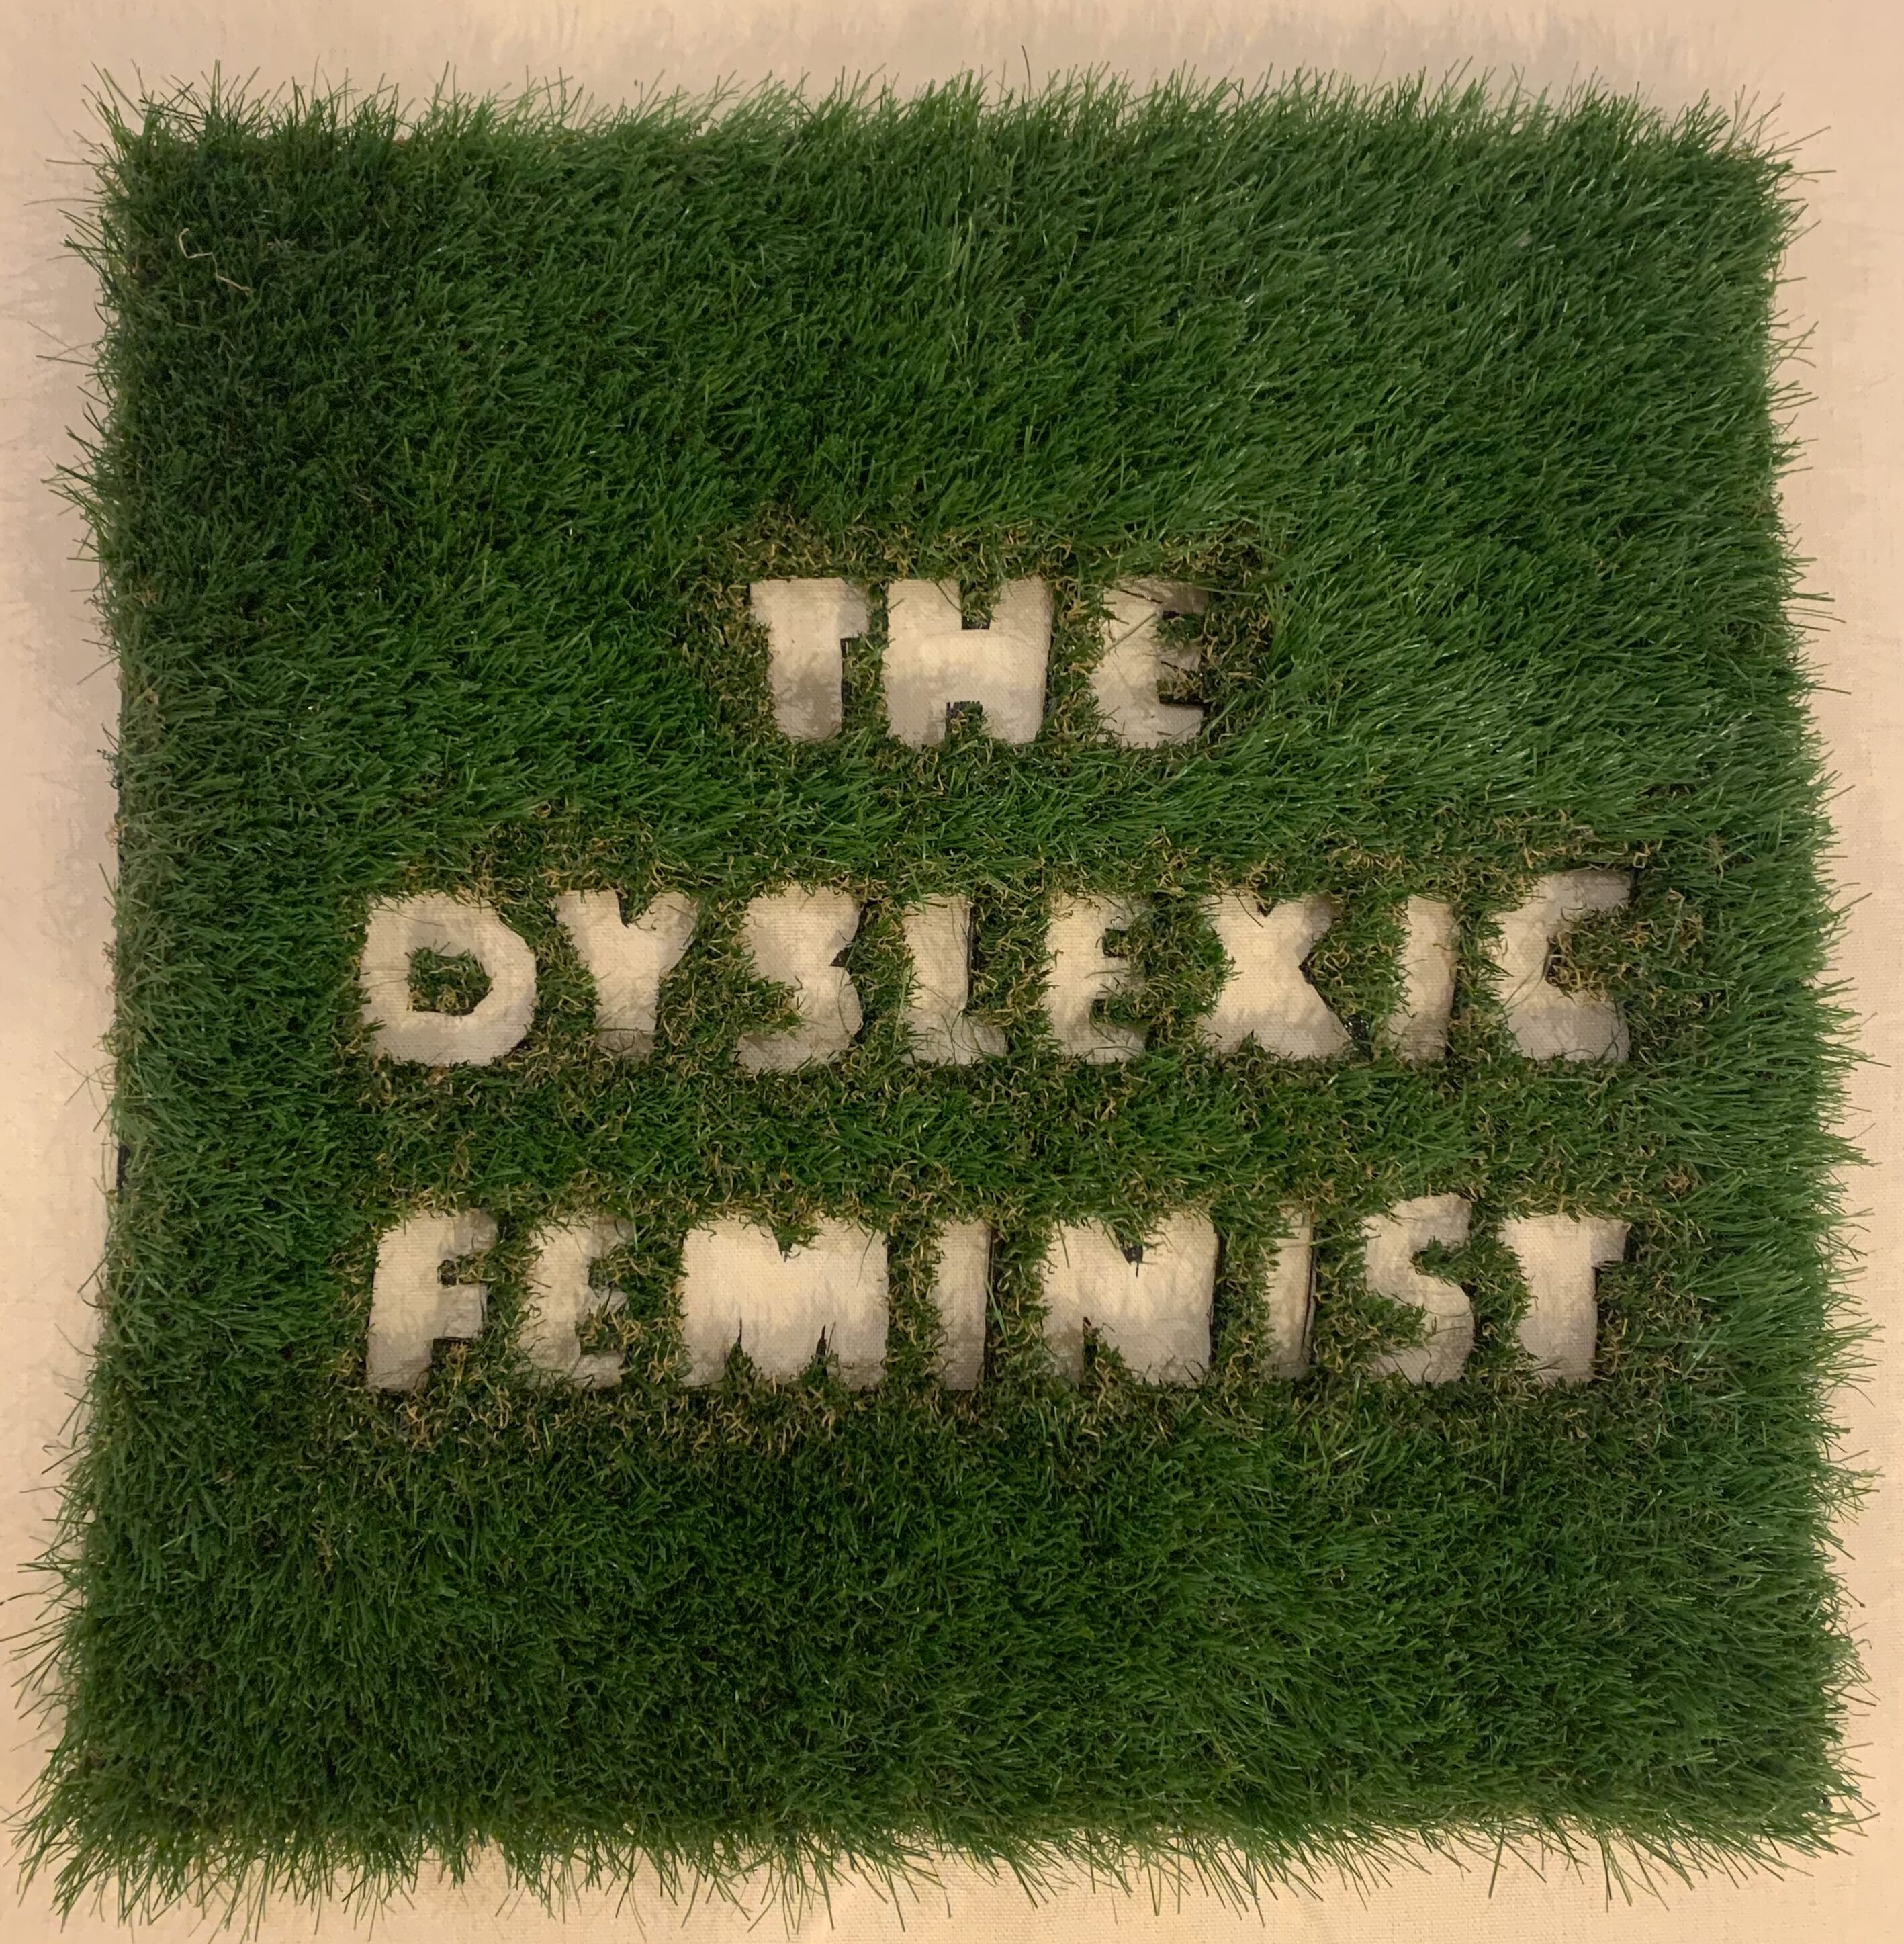  The Dyslexic Feminist